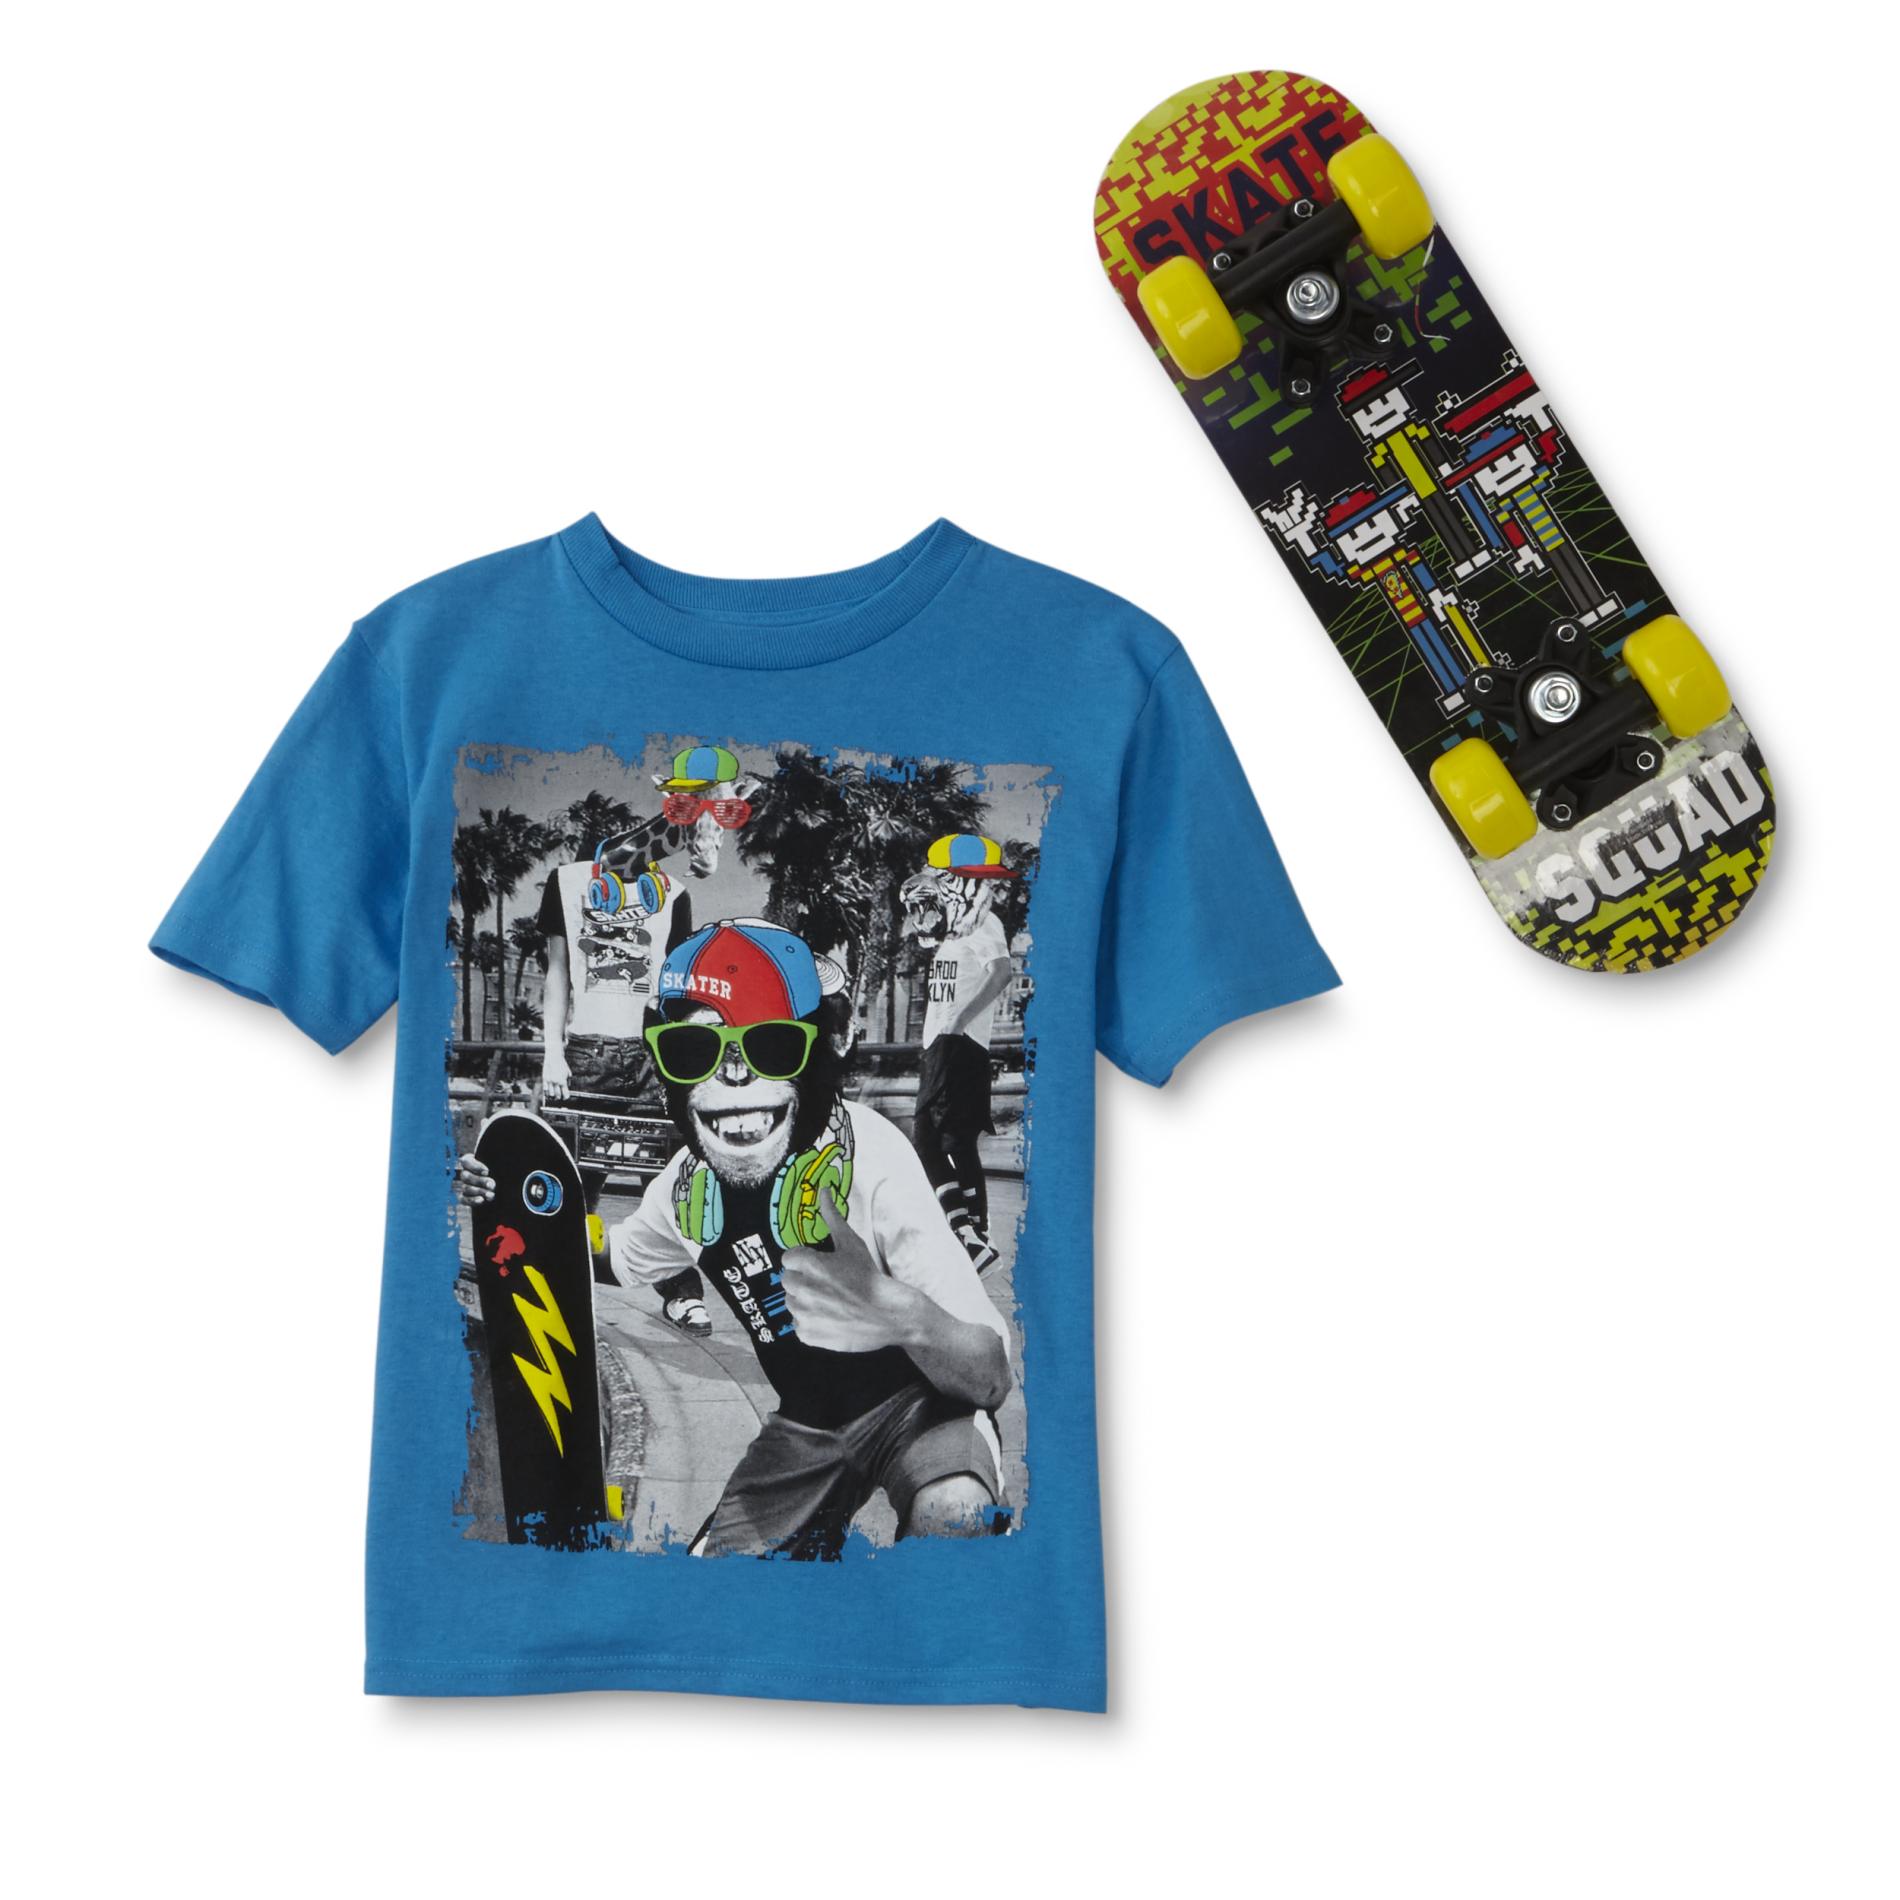 Boys' Graphic T-Shirt & Skateboard - Monkey